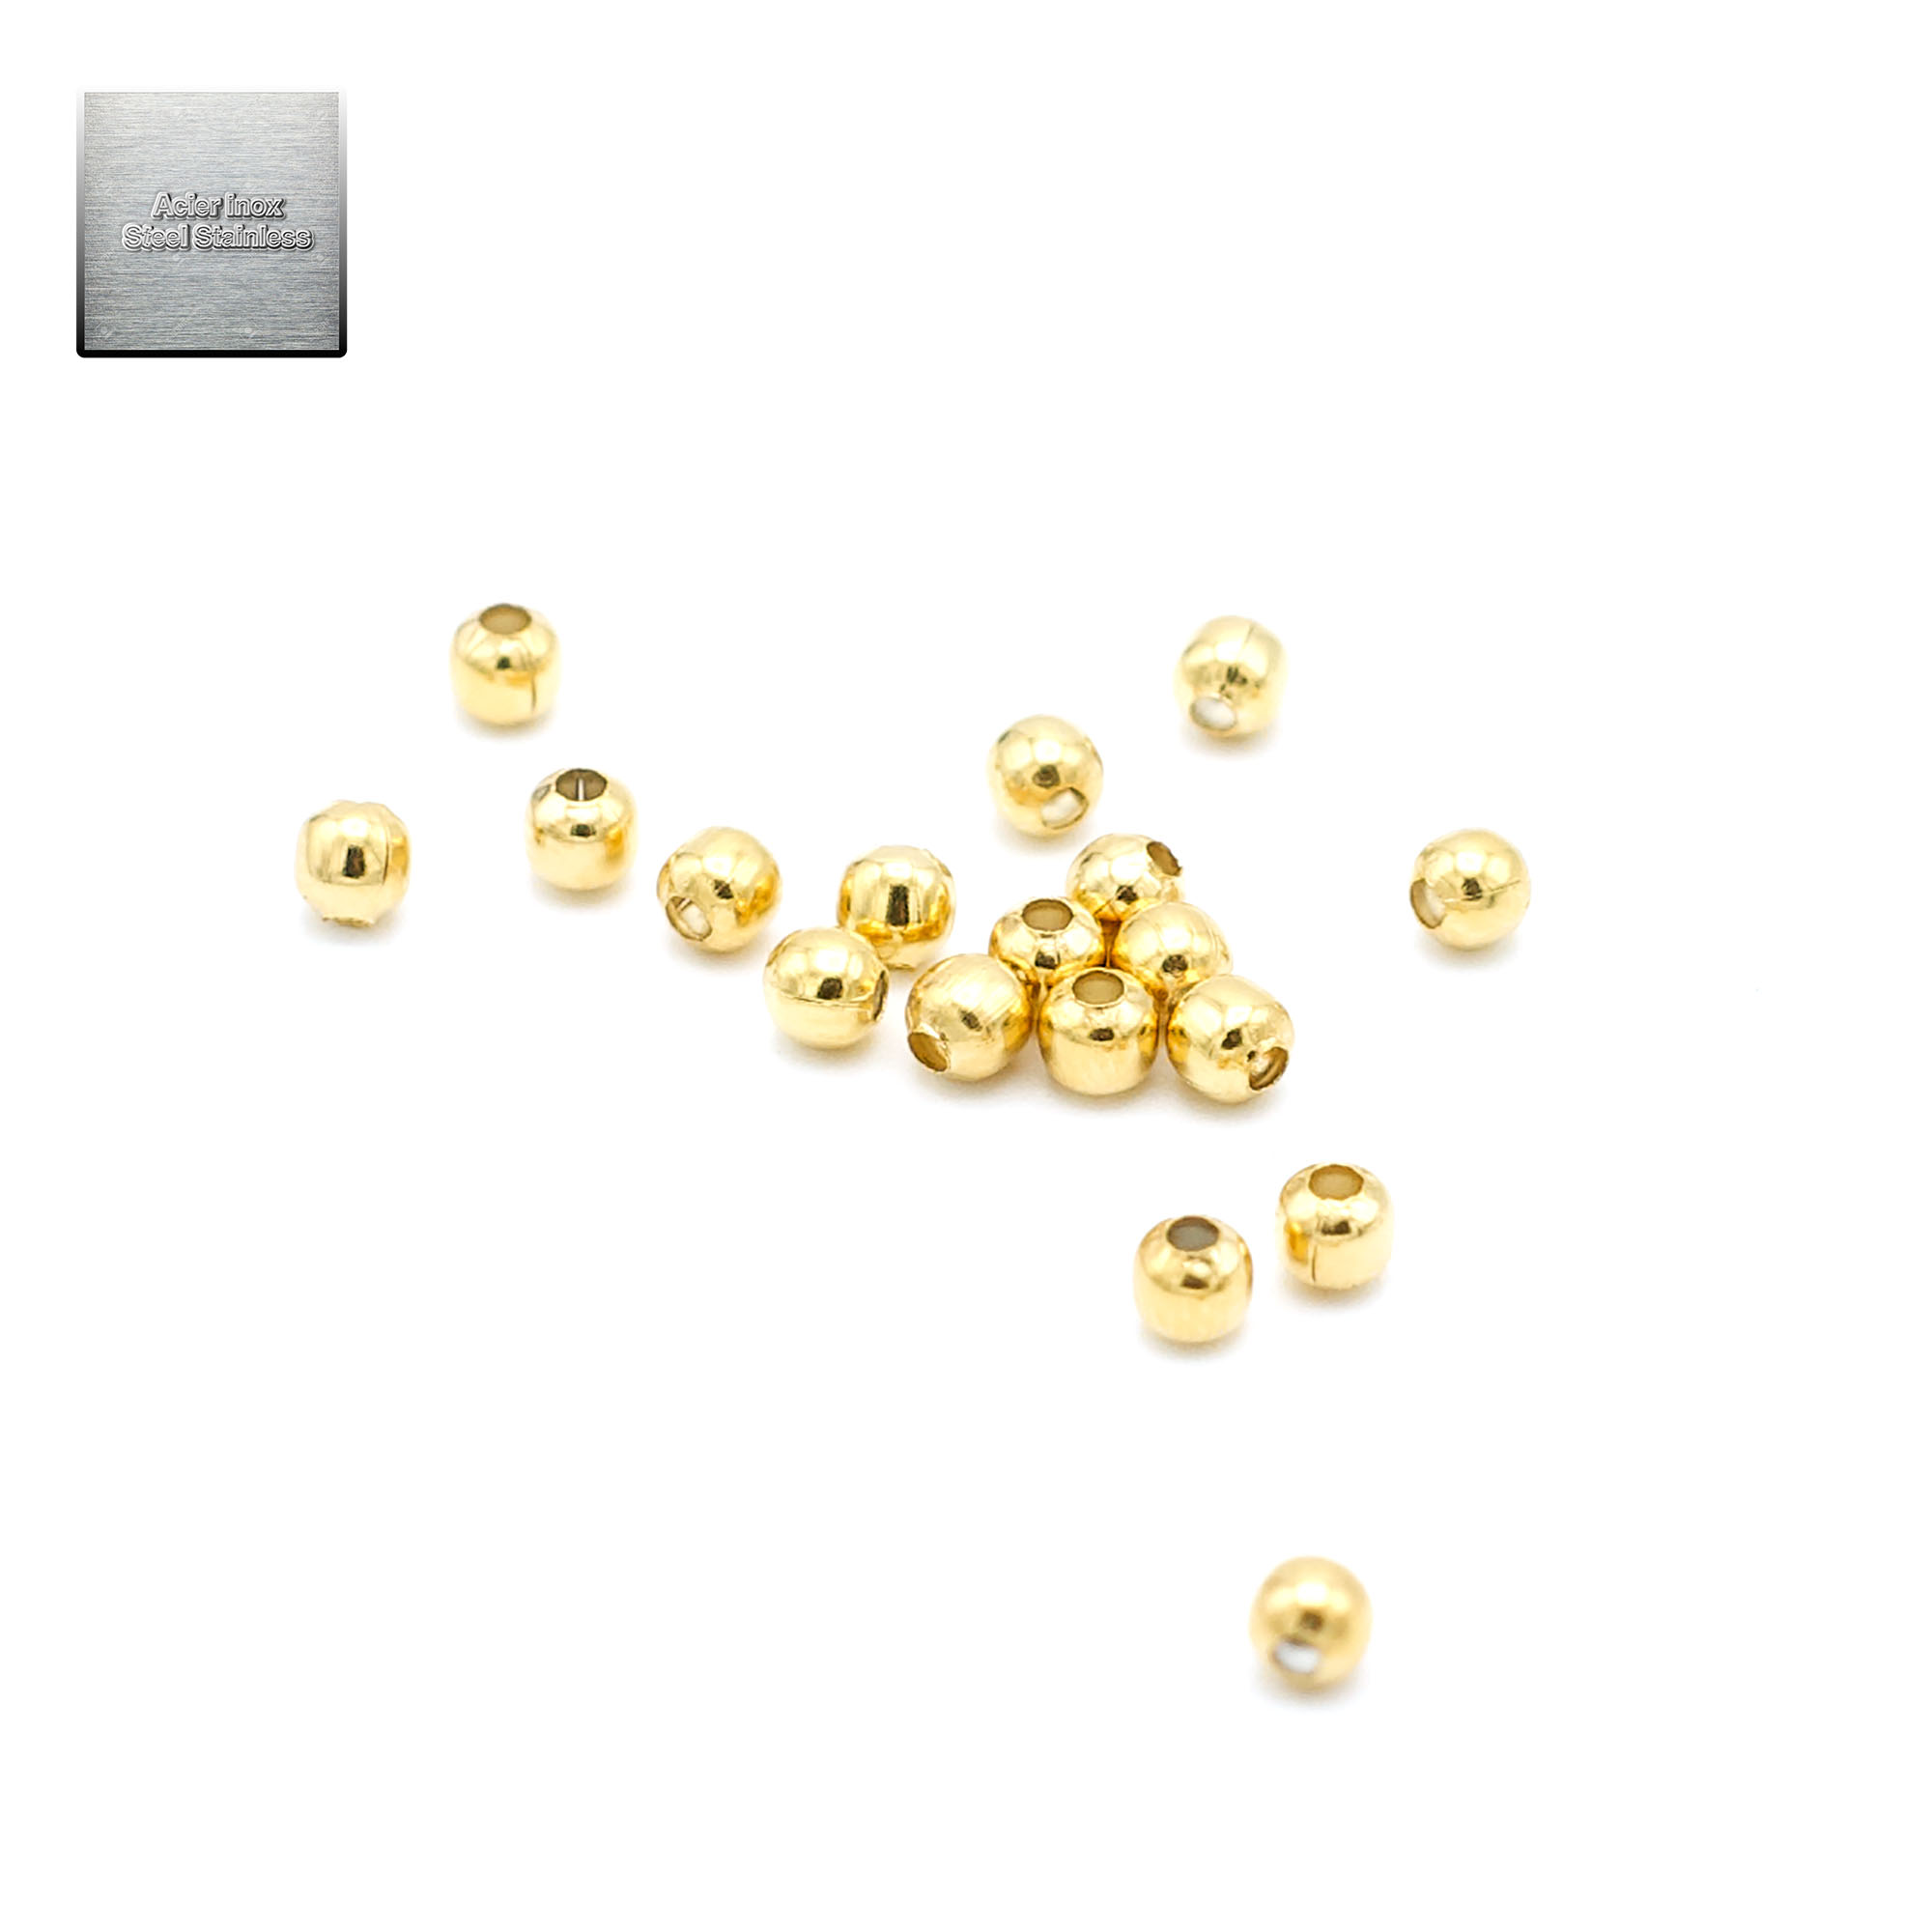 Acier inox doré: 100 perles passantes ronde 4 mm, steel stainless